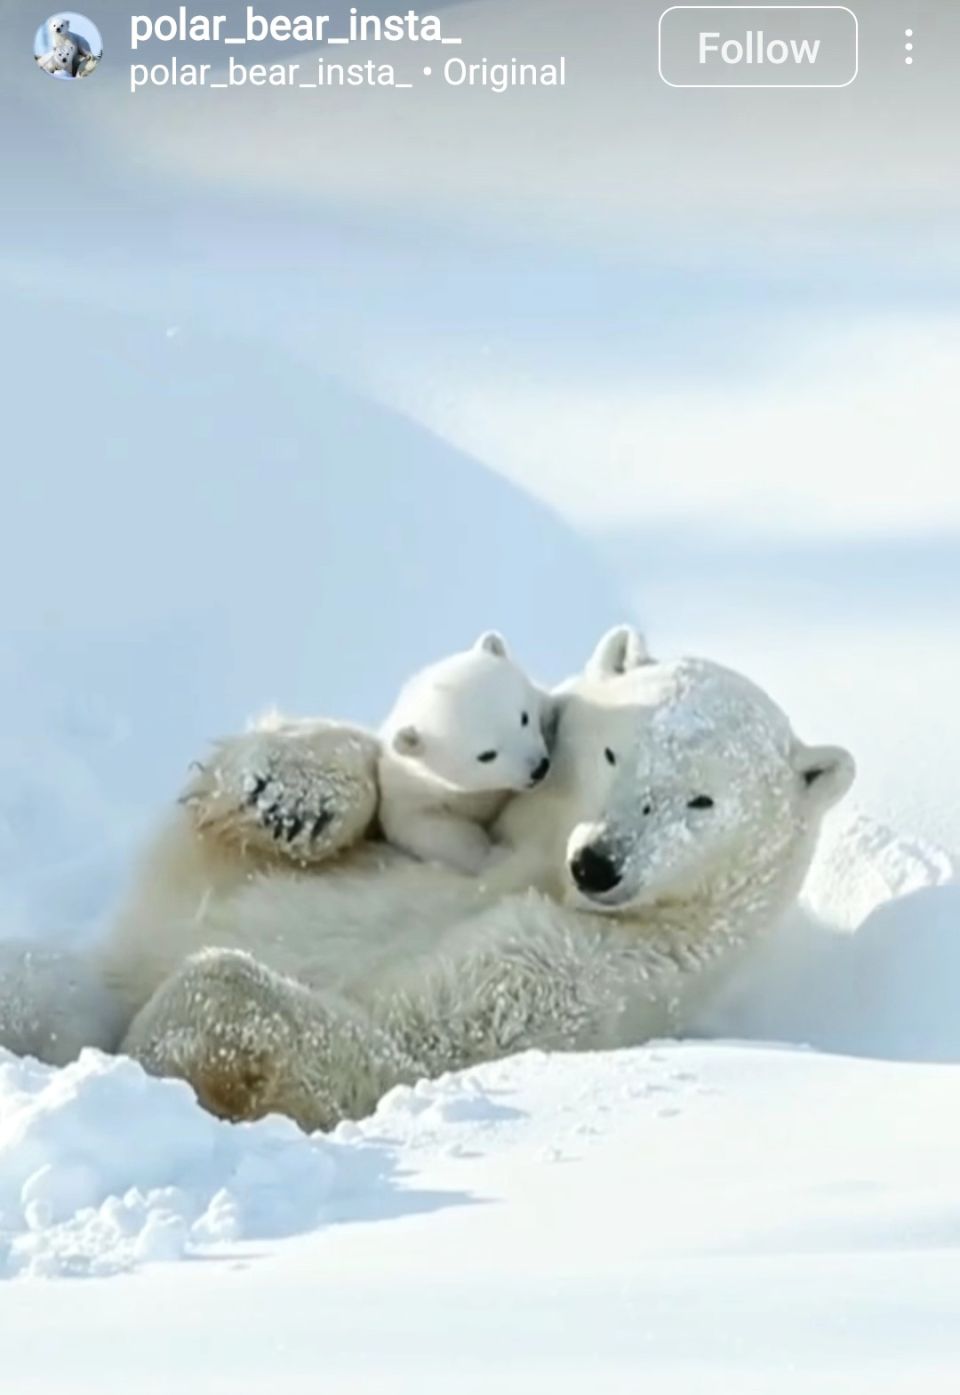 Adorable polar bear post on Instagram ♡♡